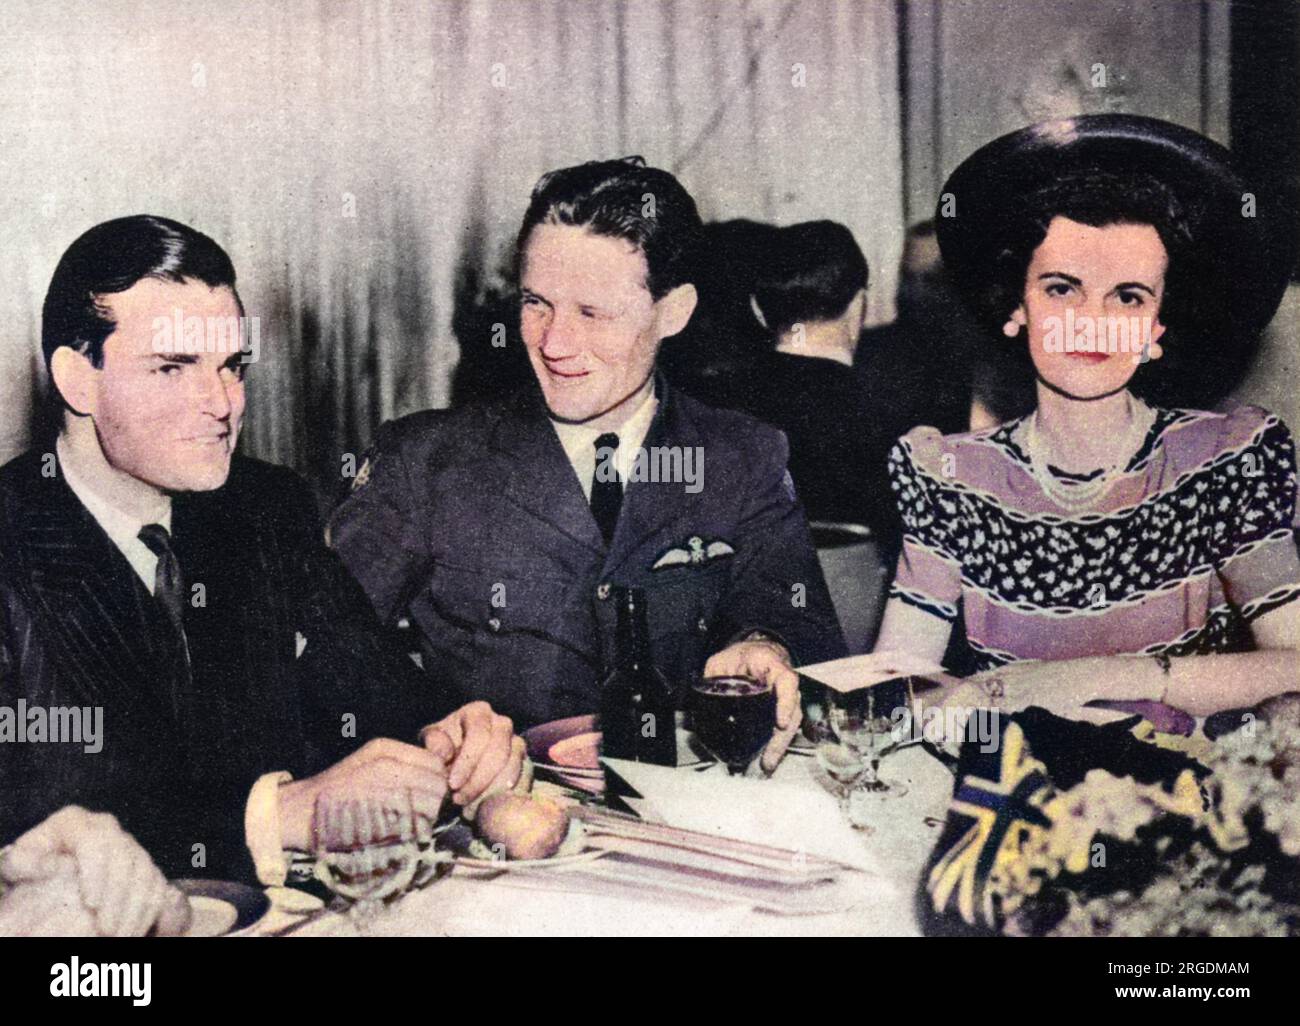 Inside a Secret World War II Officers' Club